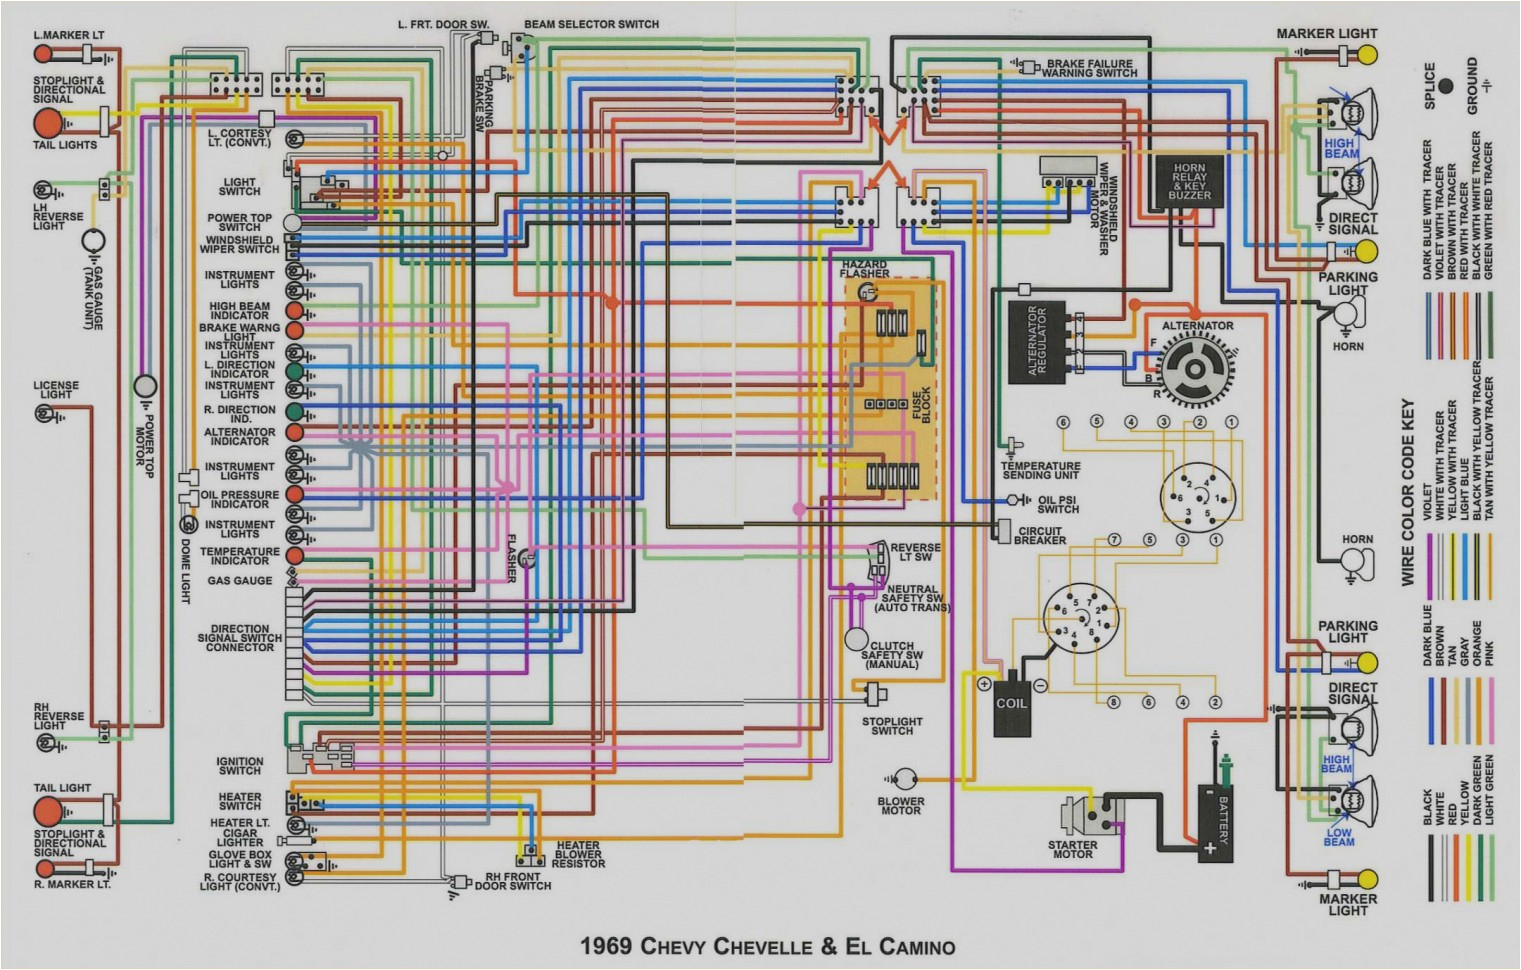 fuse box diagram 1966 el camino chevelle worksheet and wiring rh bookinc co 65 el camino